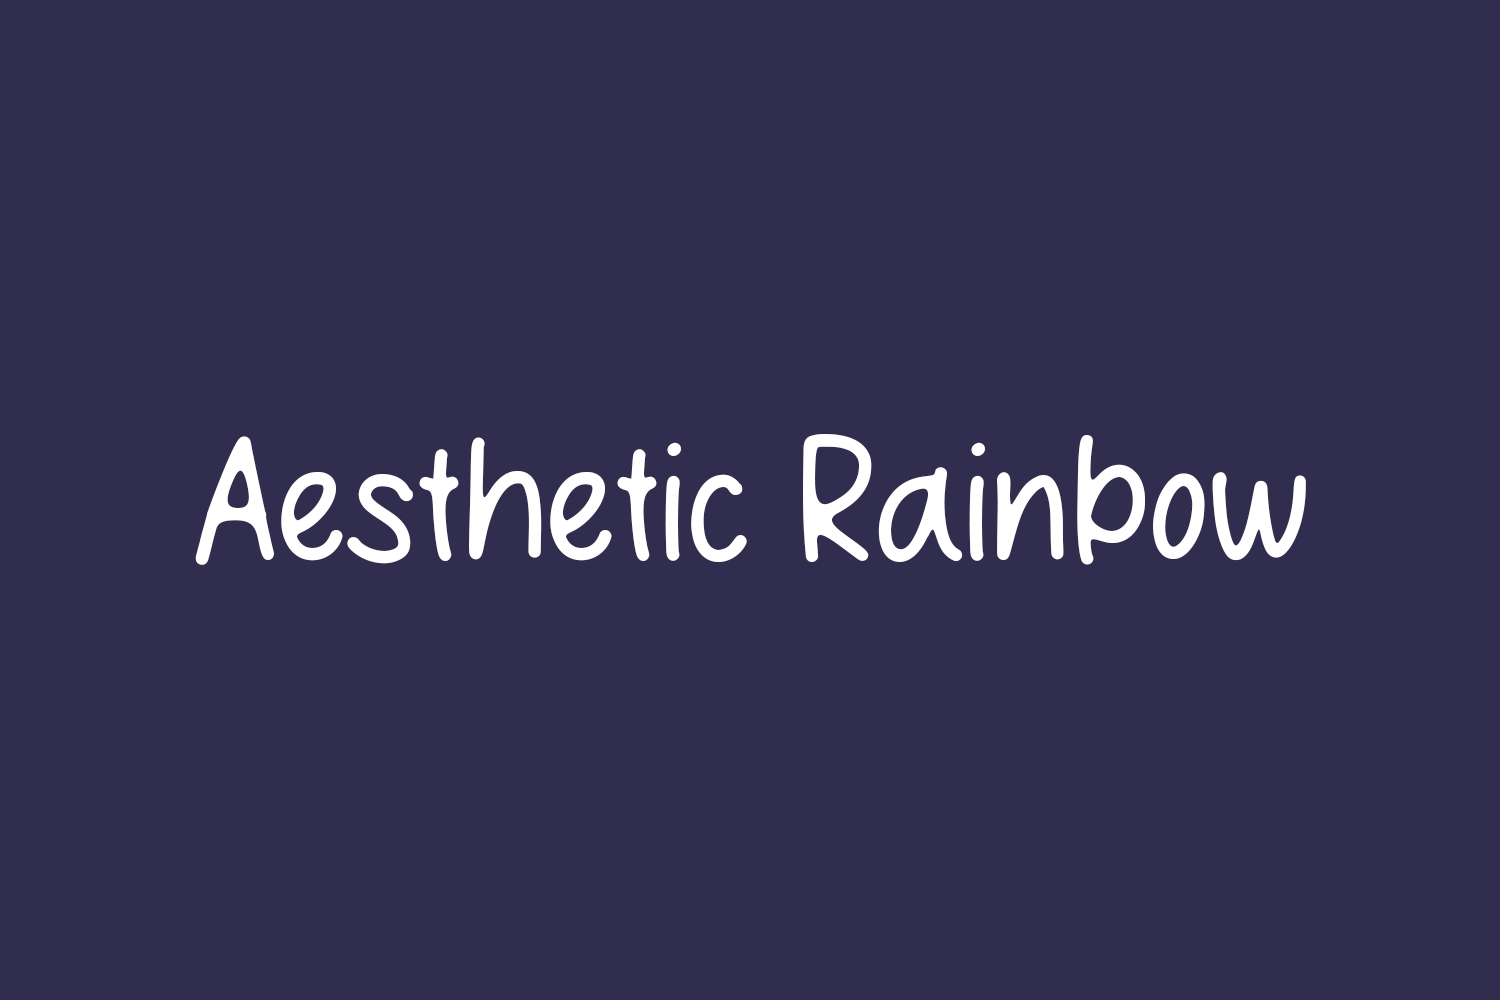 Aesthetic Rainbow Free Font